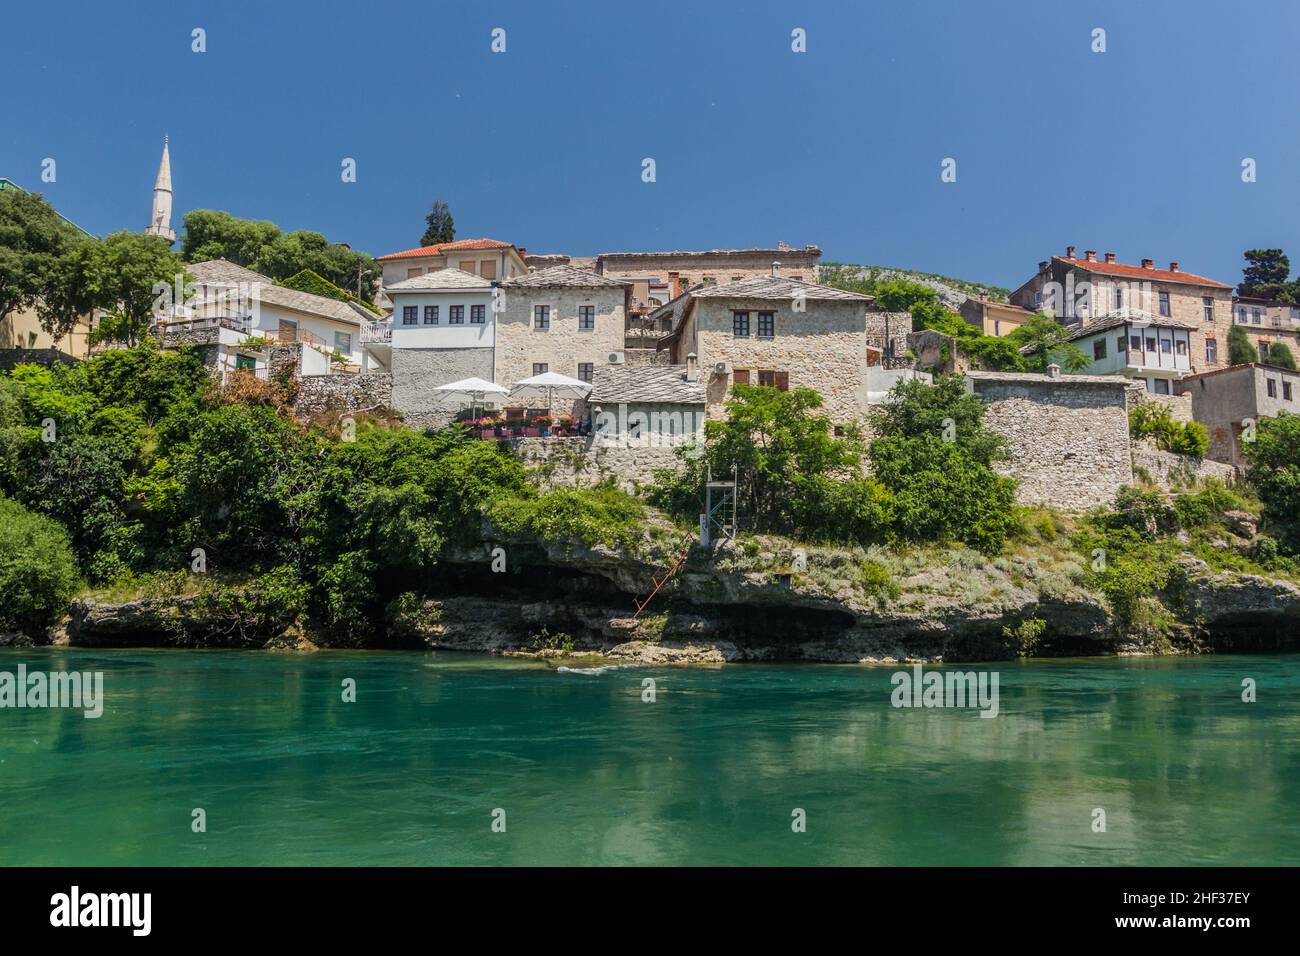 Old stone buildings in Mostar. Bosnia and Herzegovina Stock Photo